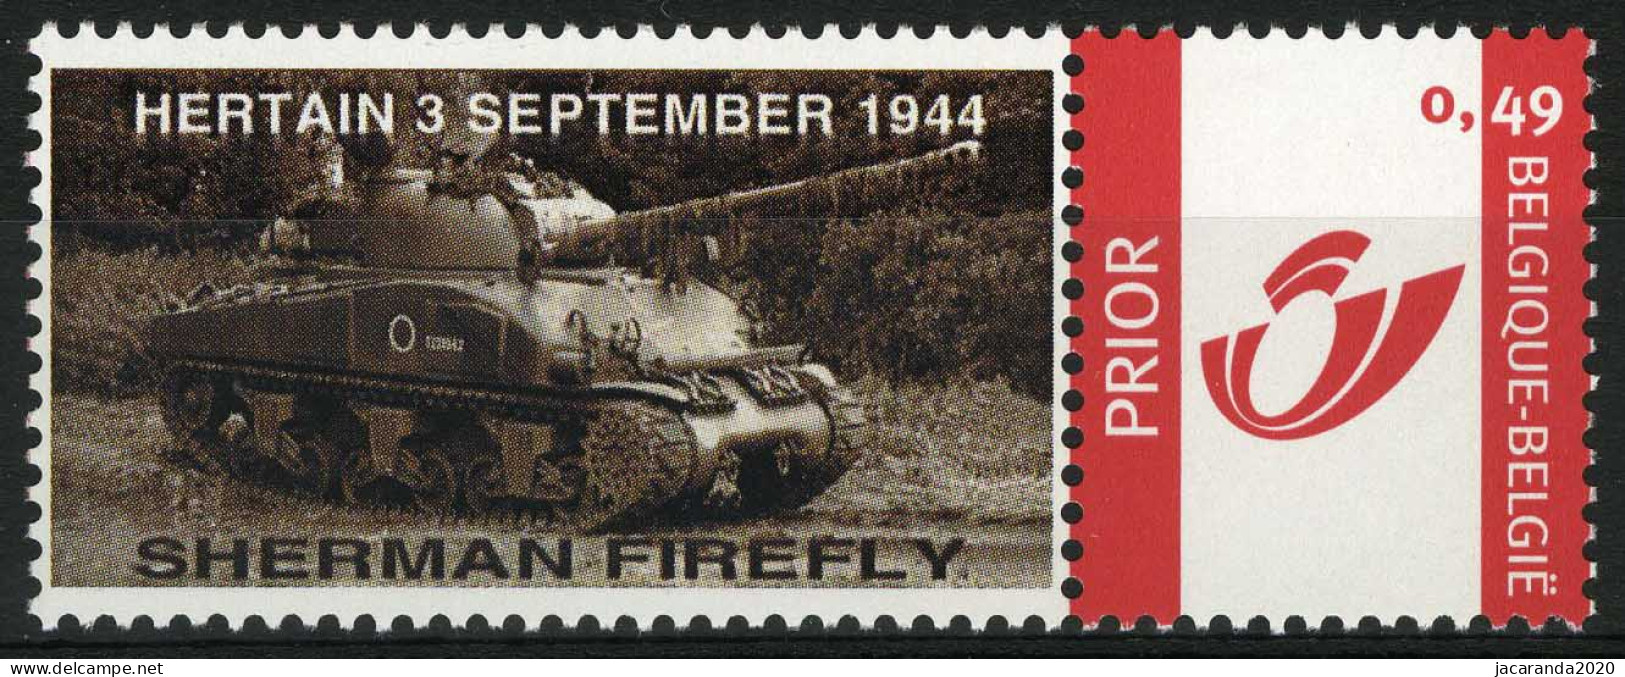 België 3183 - Duostamp - Shireman Firefly - Oorlog - Tank - Hertain 3 September 1944 - Mint